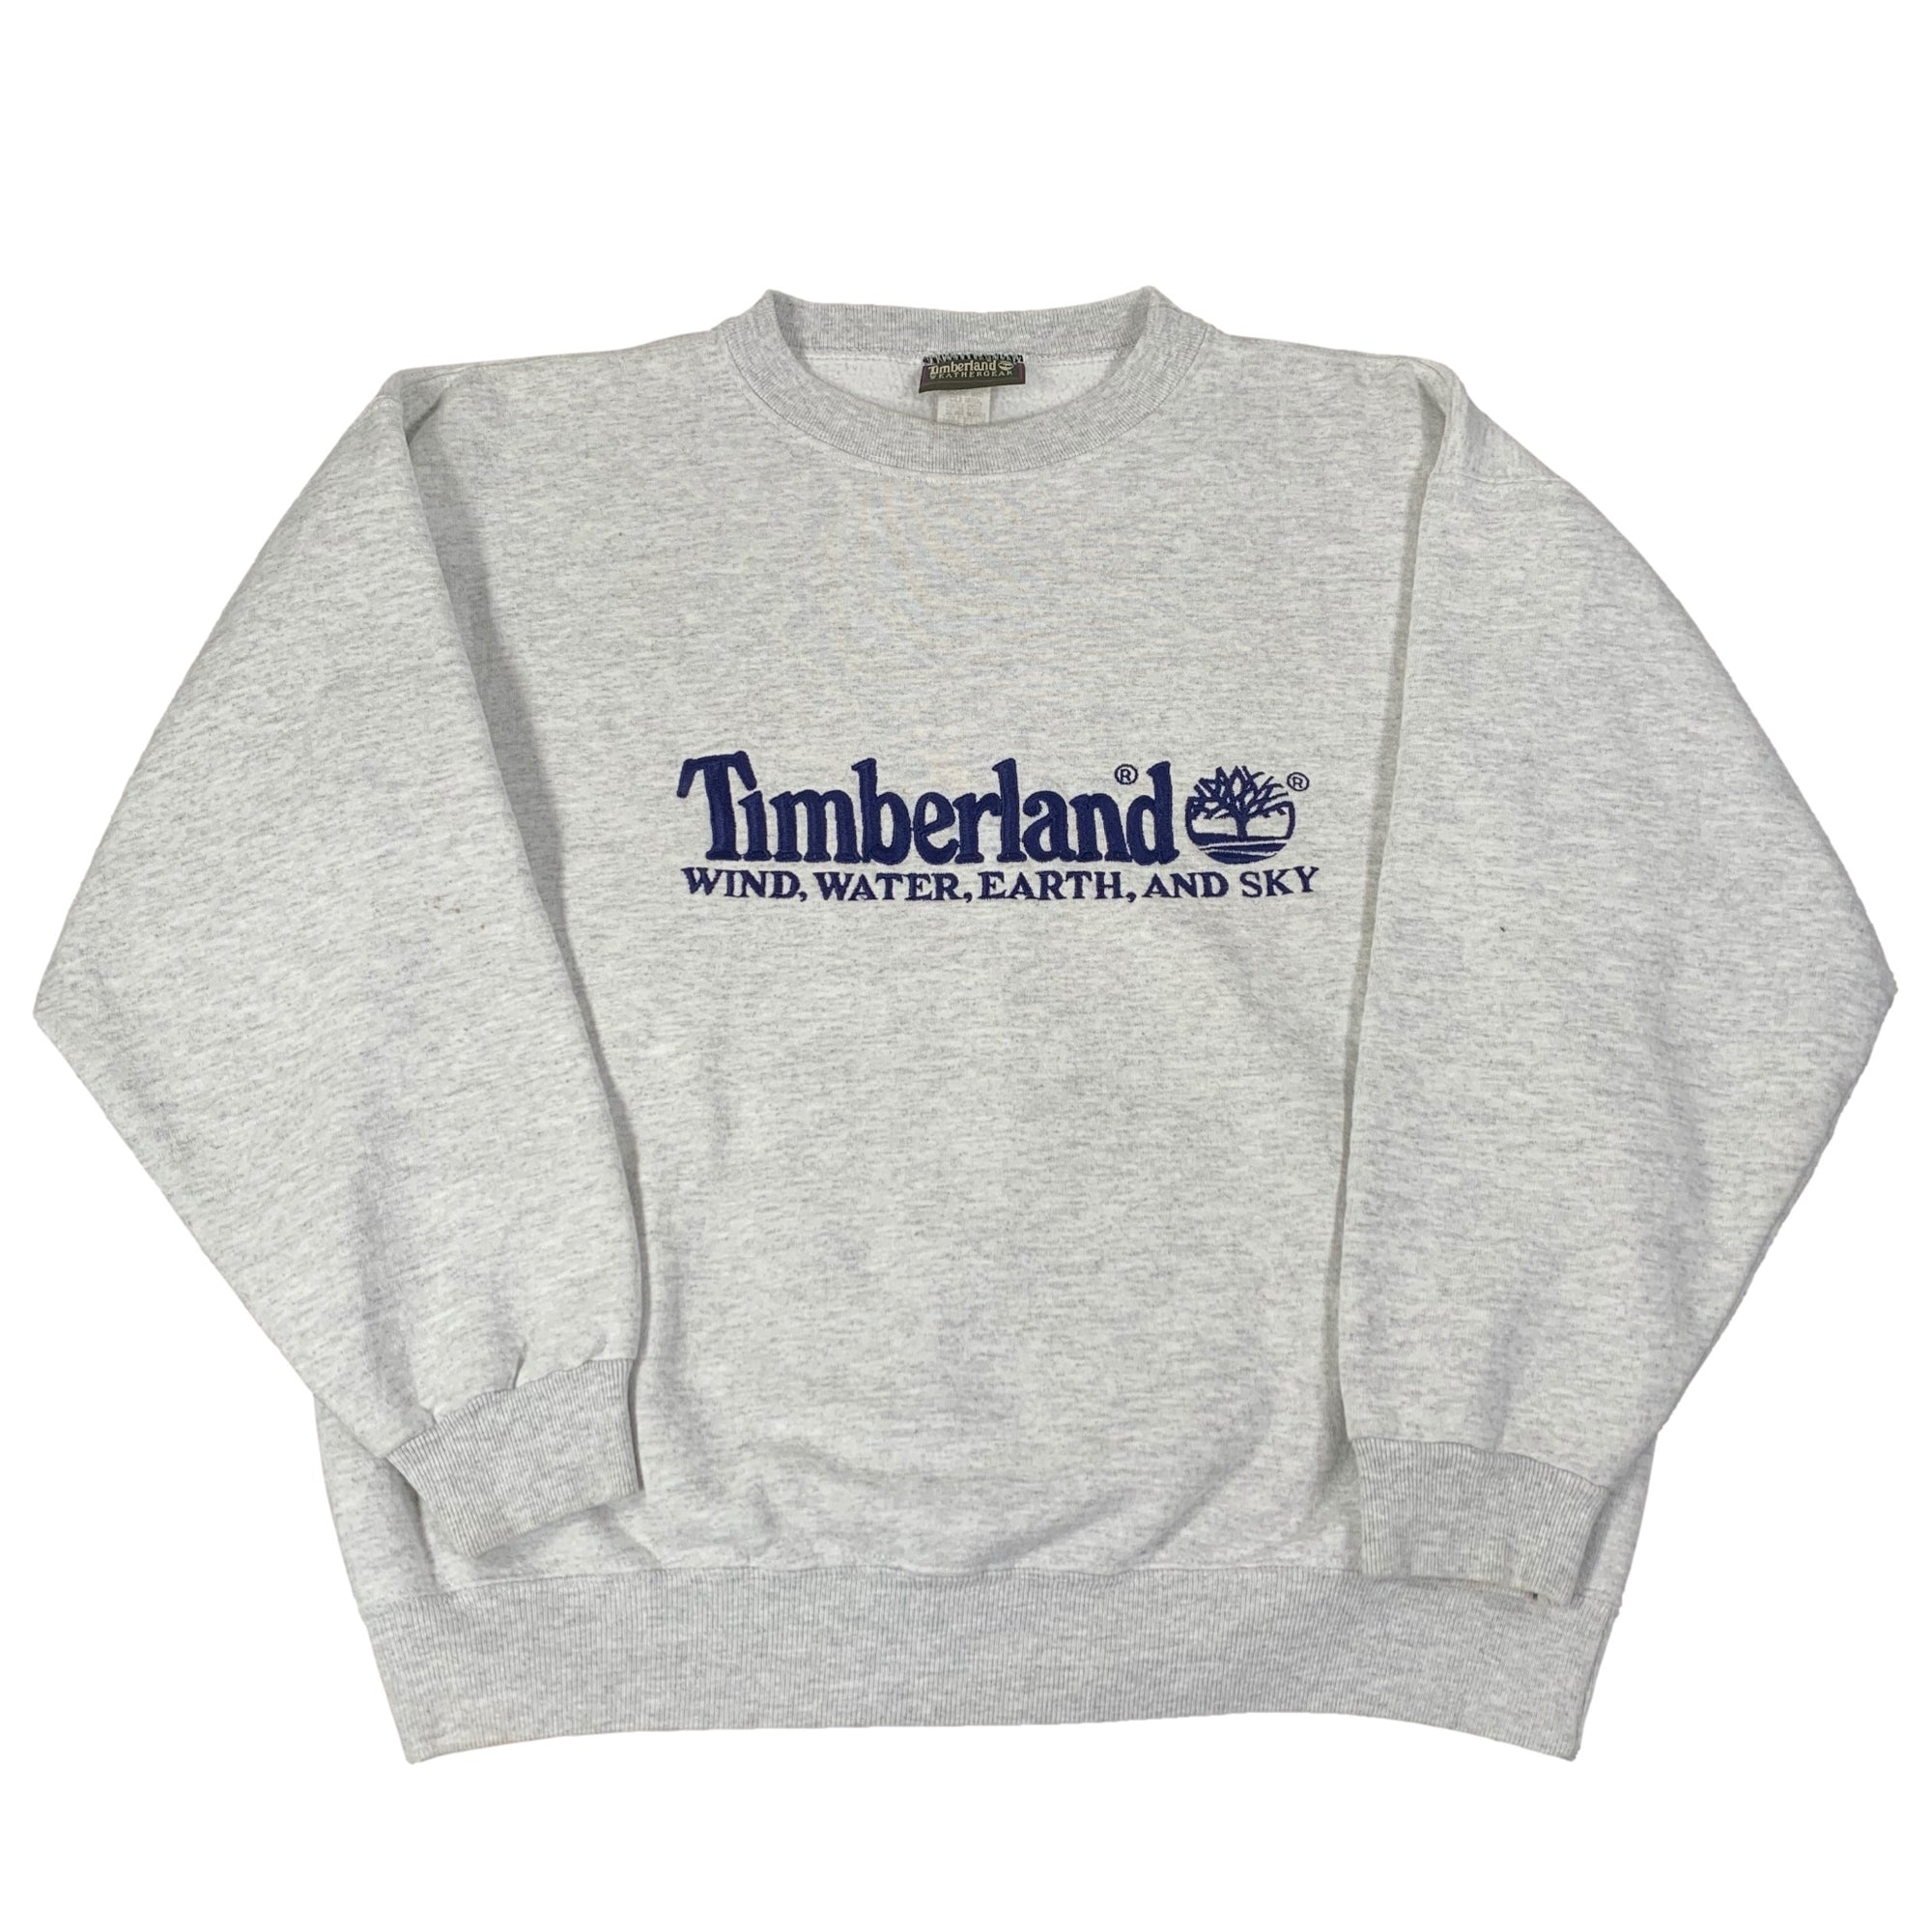 Vintage Timberland "Weathergear" Crewneck Sweatshirt - jointcustodydc